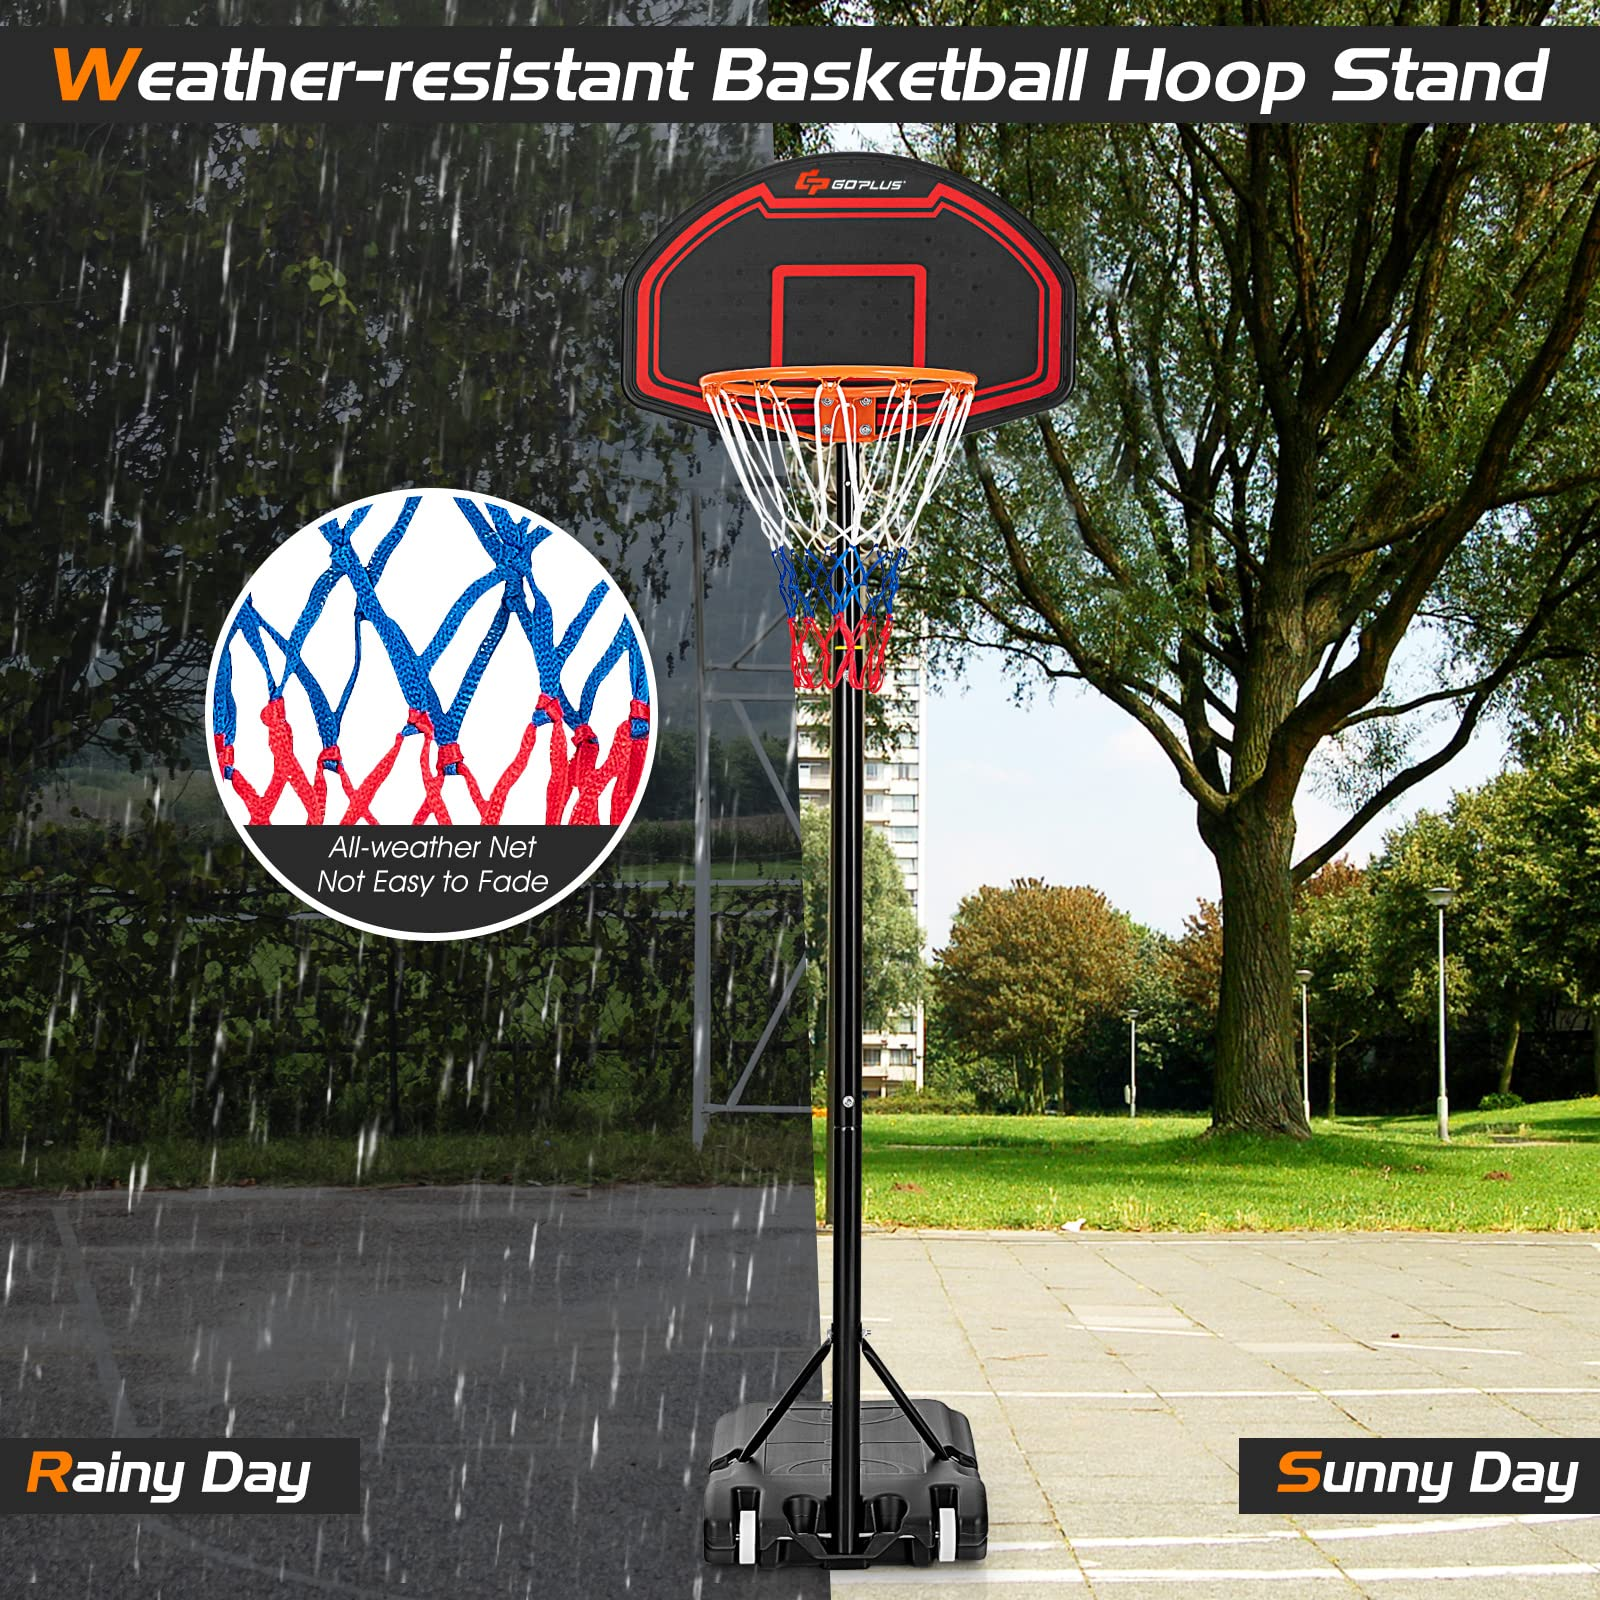 Goplus Portable Basketball Hoop Outdoor, 6.3FT-8.1FT